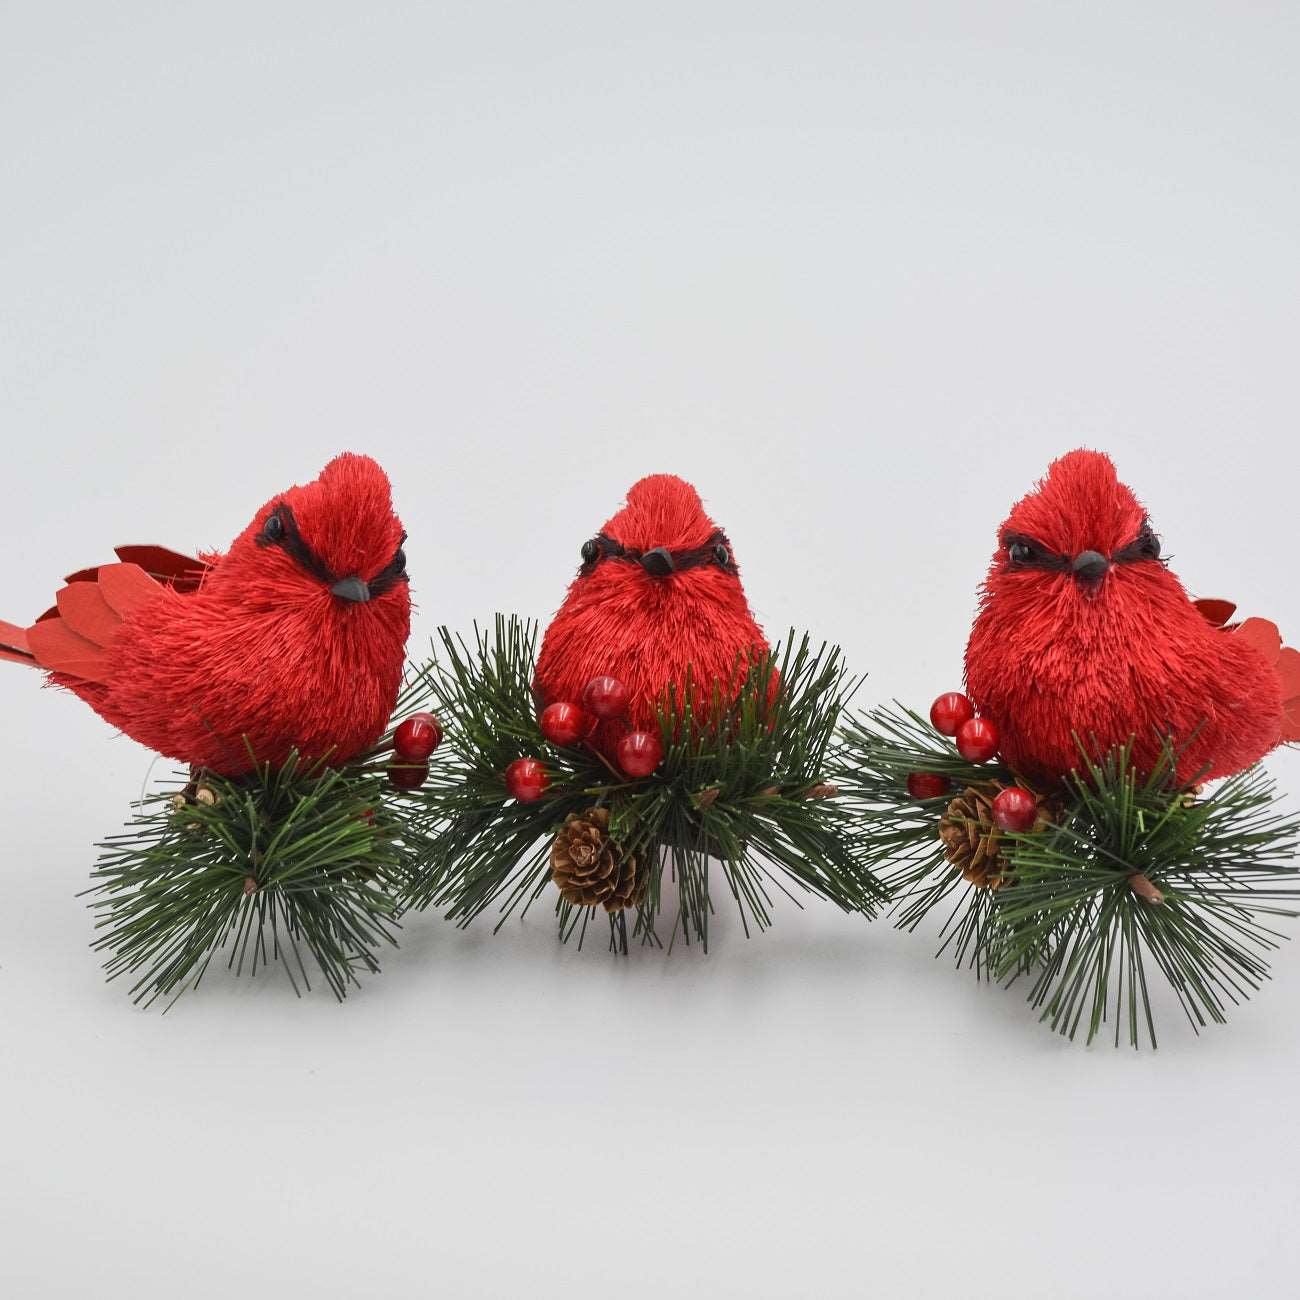 Cardinal ornaments